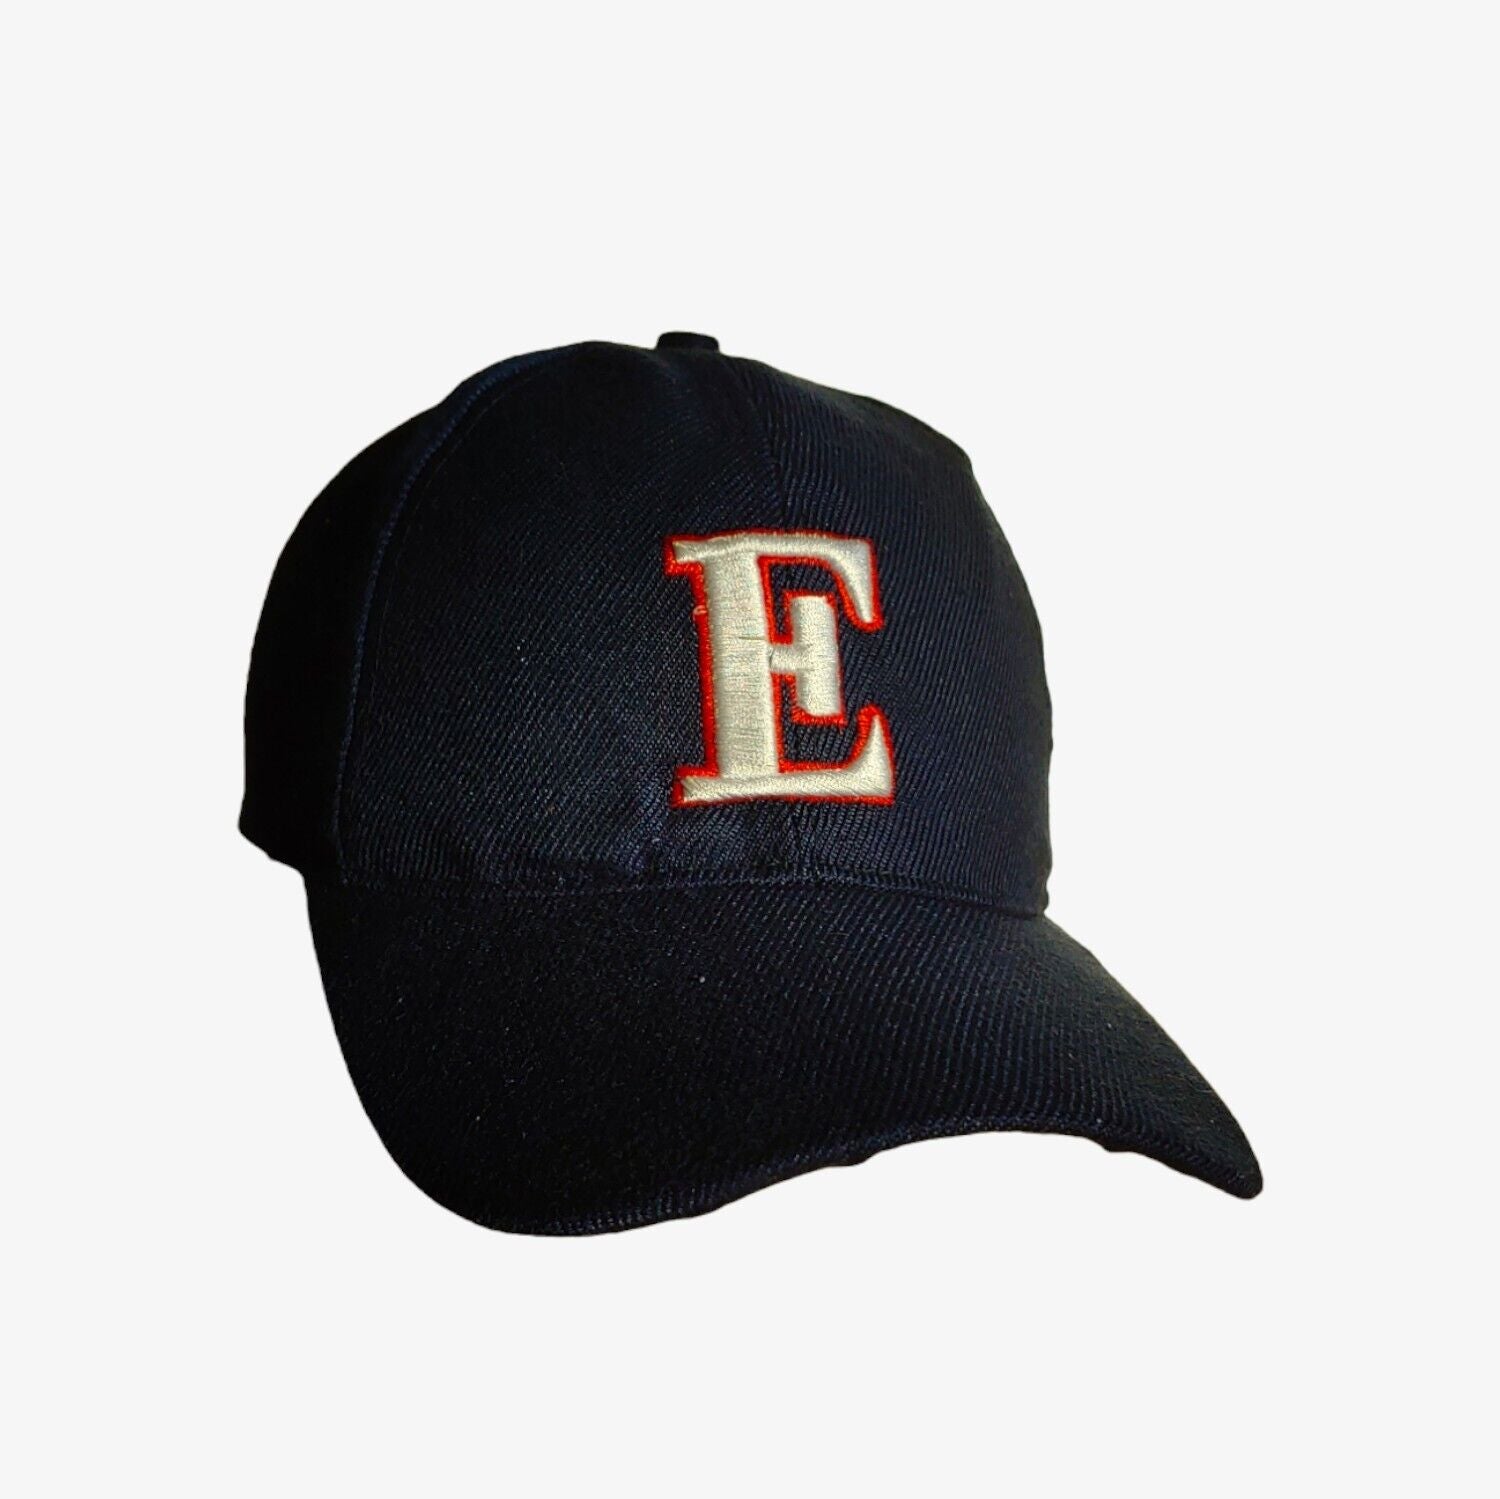 Vintage 1990s E Embroidered Baseball Cap - Casspios Dream